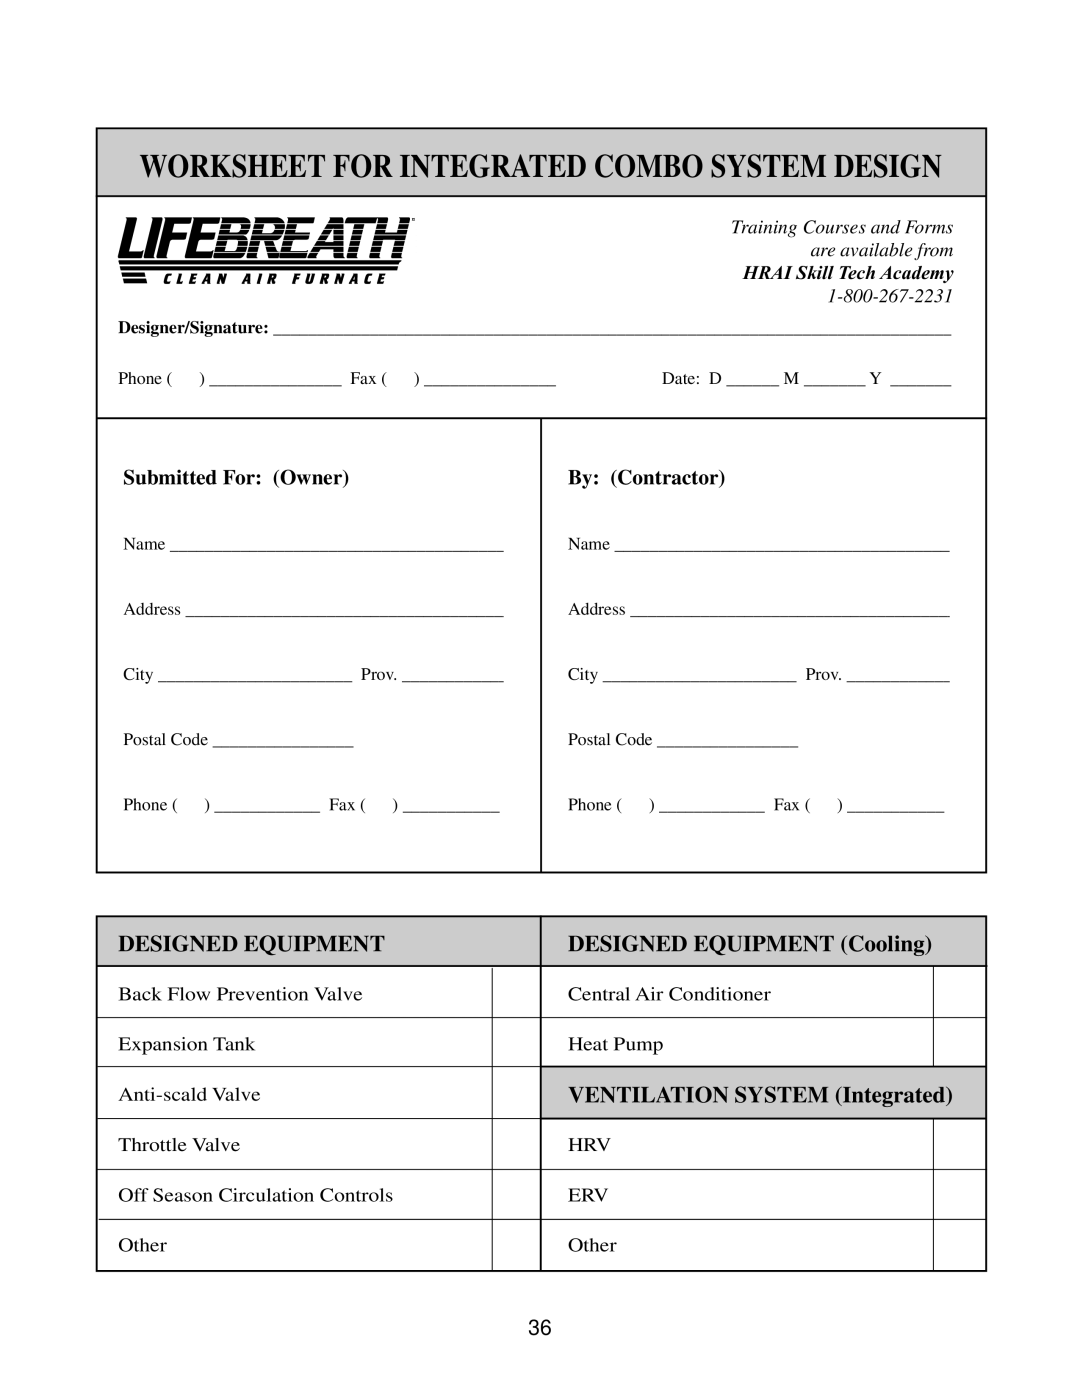 Lifebreath 40DHWH(T) Worksheet For Integrated Combo System Design, Designed Equipment, DESIGNED EQUIPMENT Cooling 